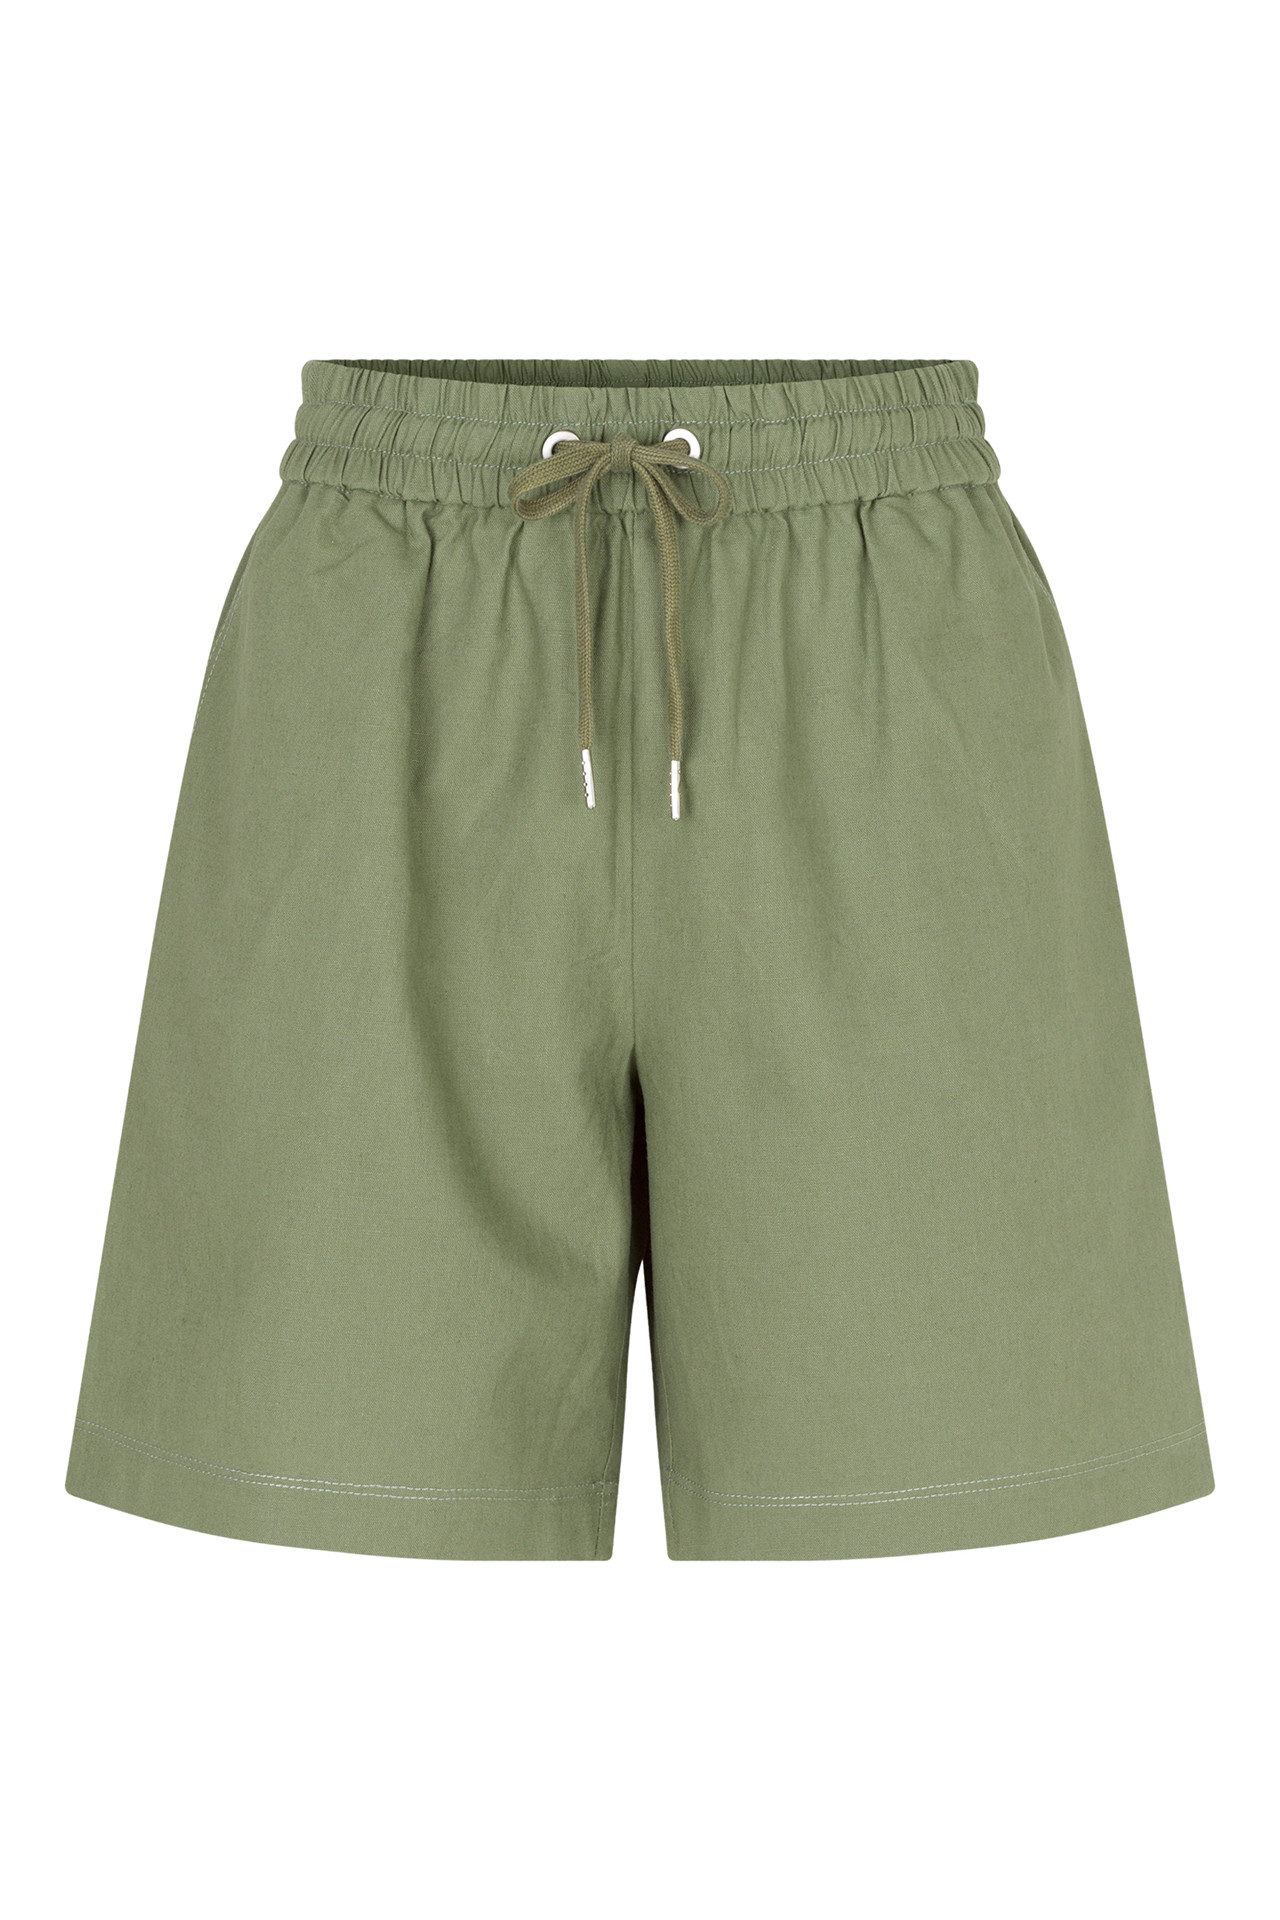 TWO GENERATIONS Teton shorts (OLIVE GREEN L)